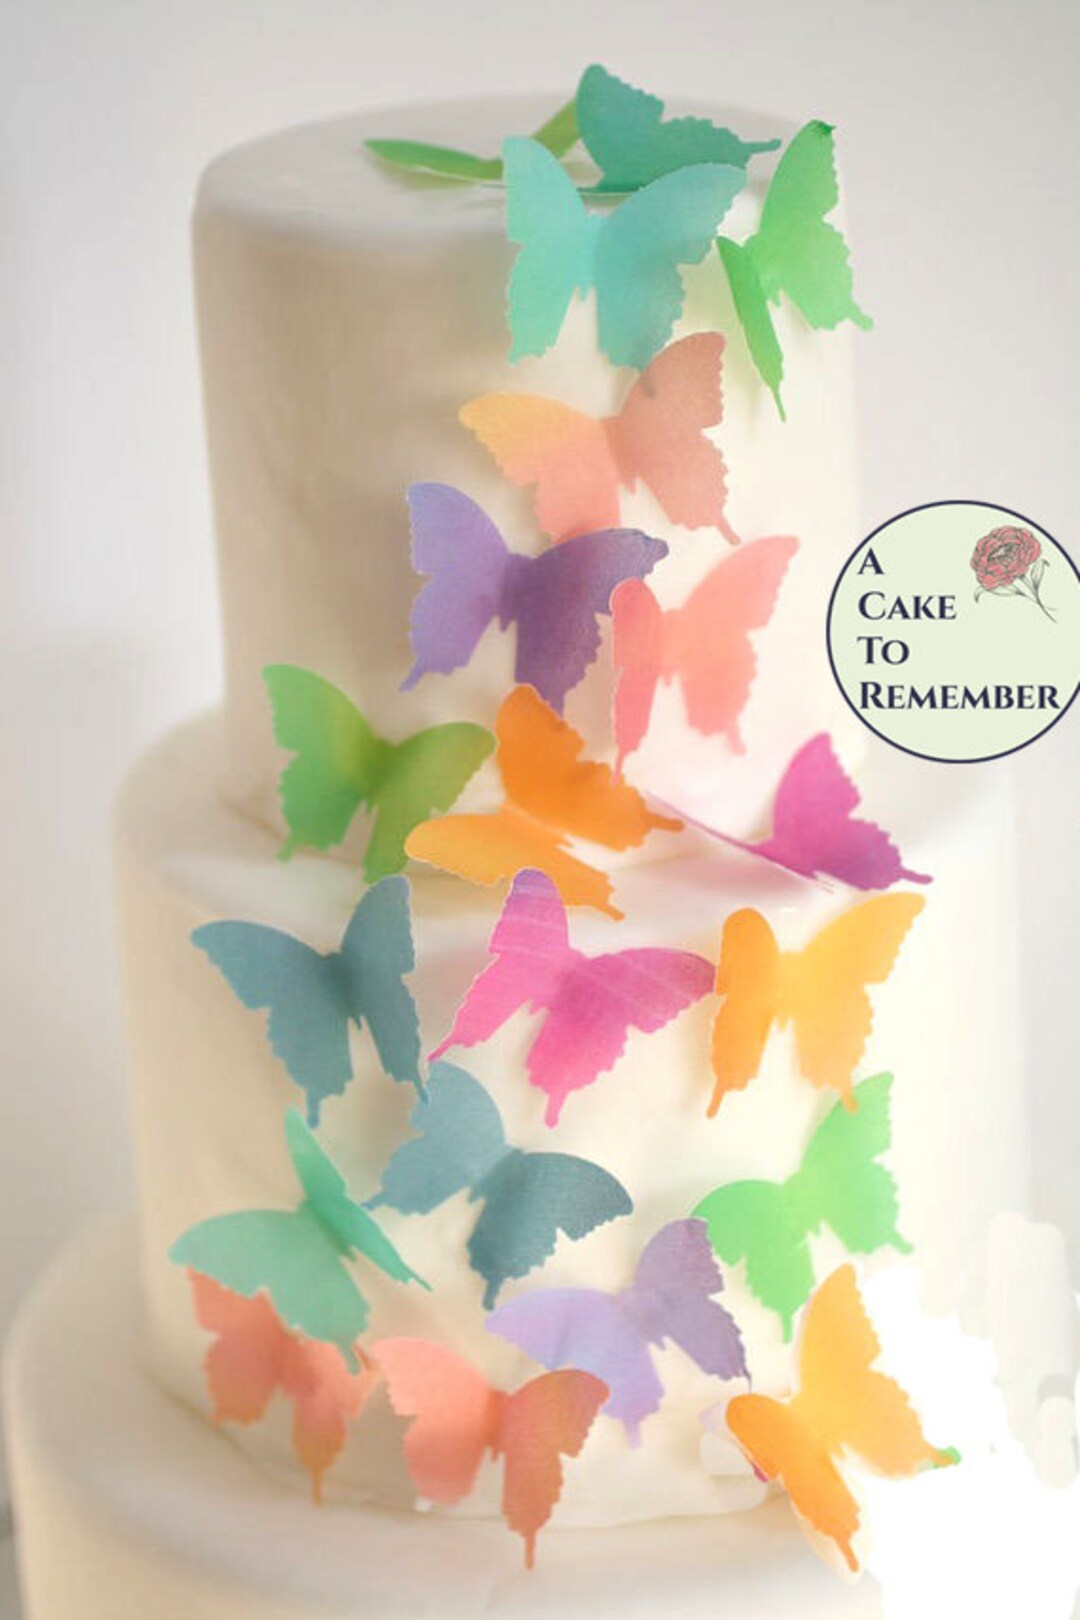 28 adornos comestibles para pasteles o cupcakes de mariposas arcoíris. Mariposas  de papel de oblea de 1.5. Decoración de cumpleaños de jardín encantado. -   México